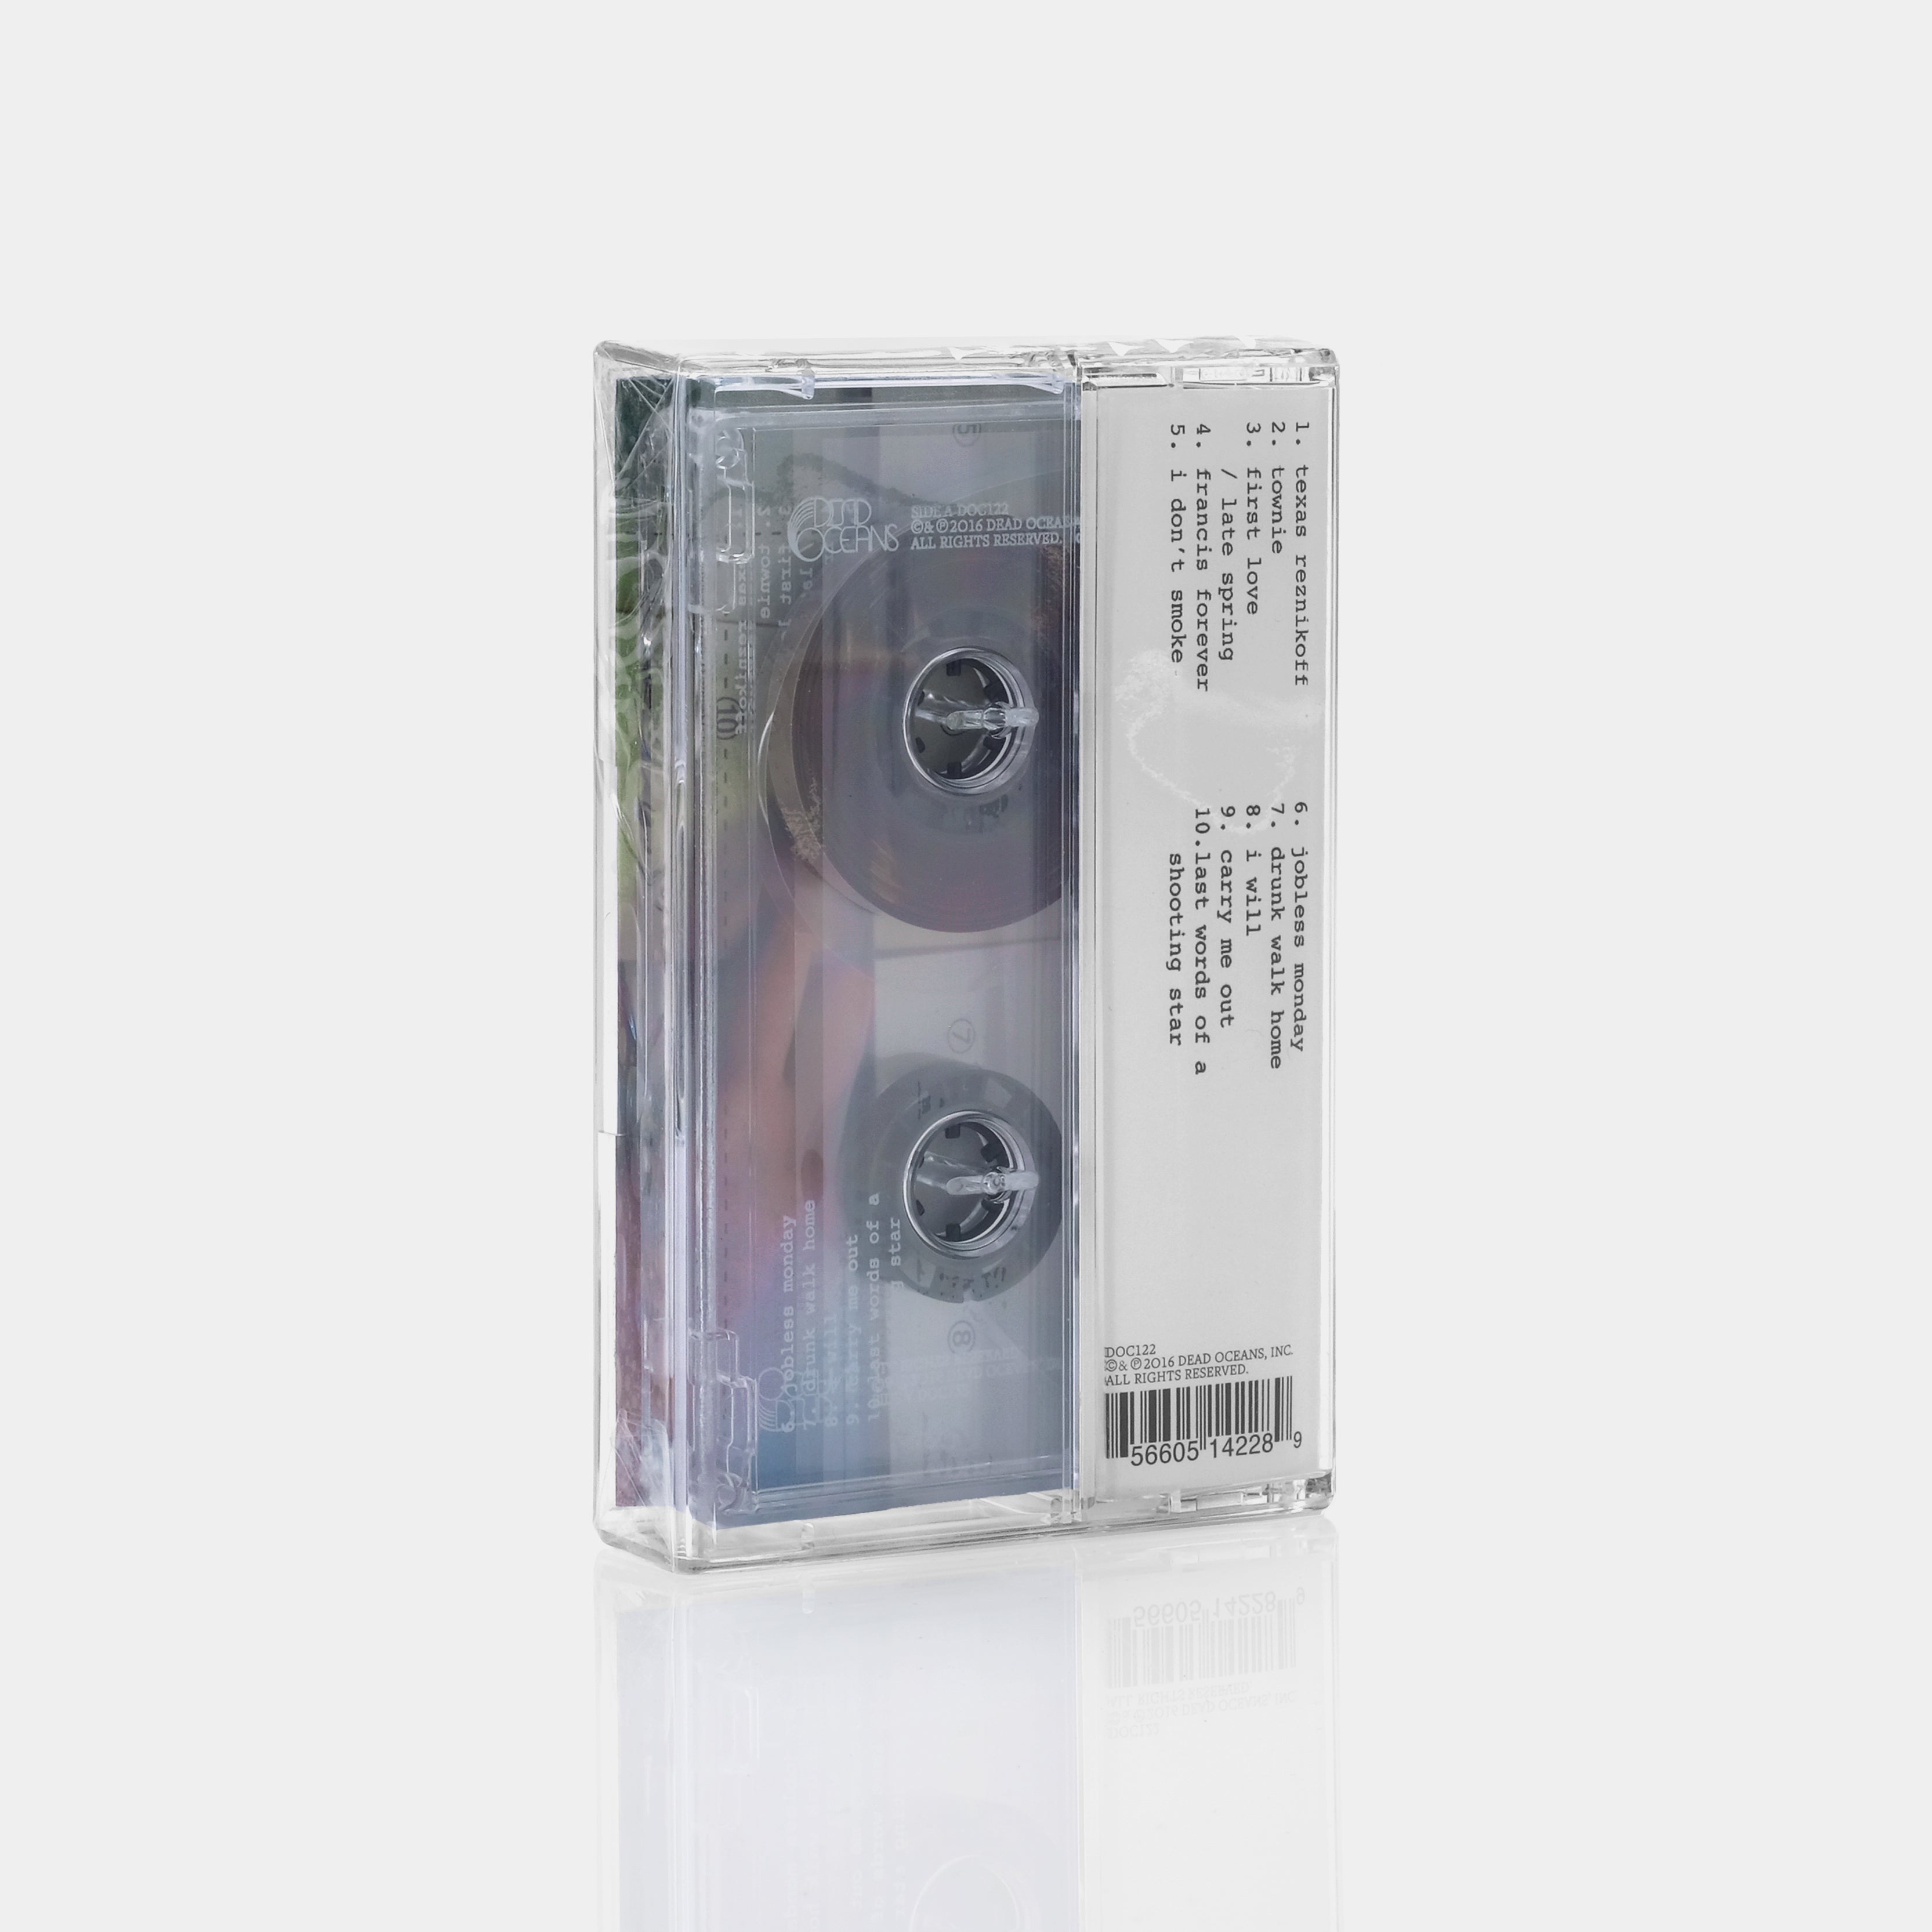 Mitski - Bury Me At Make Out Creek Cassette Tape